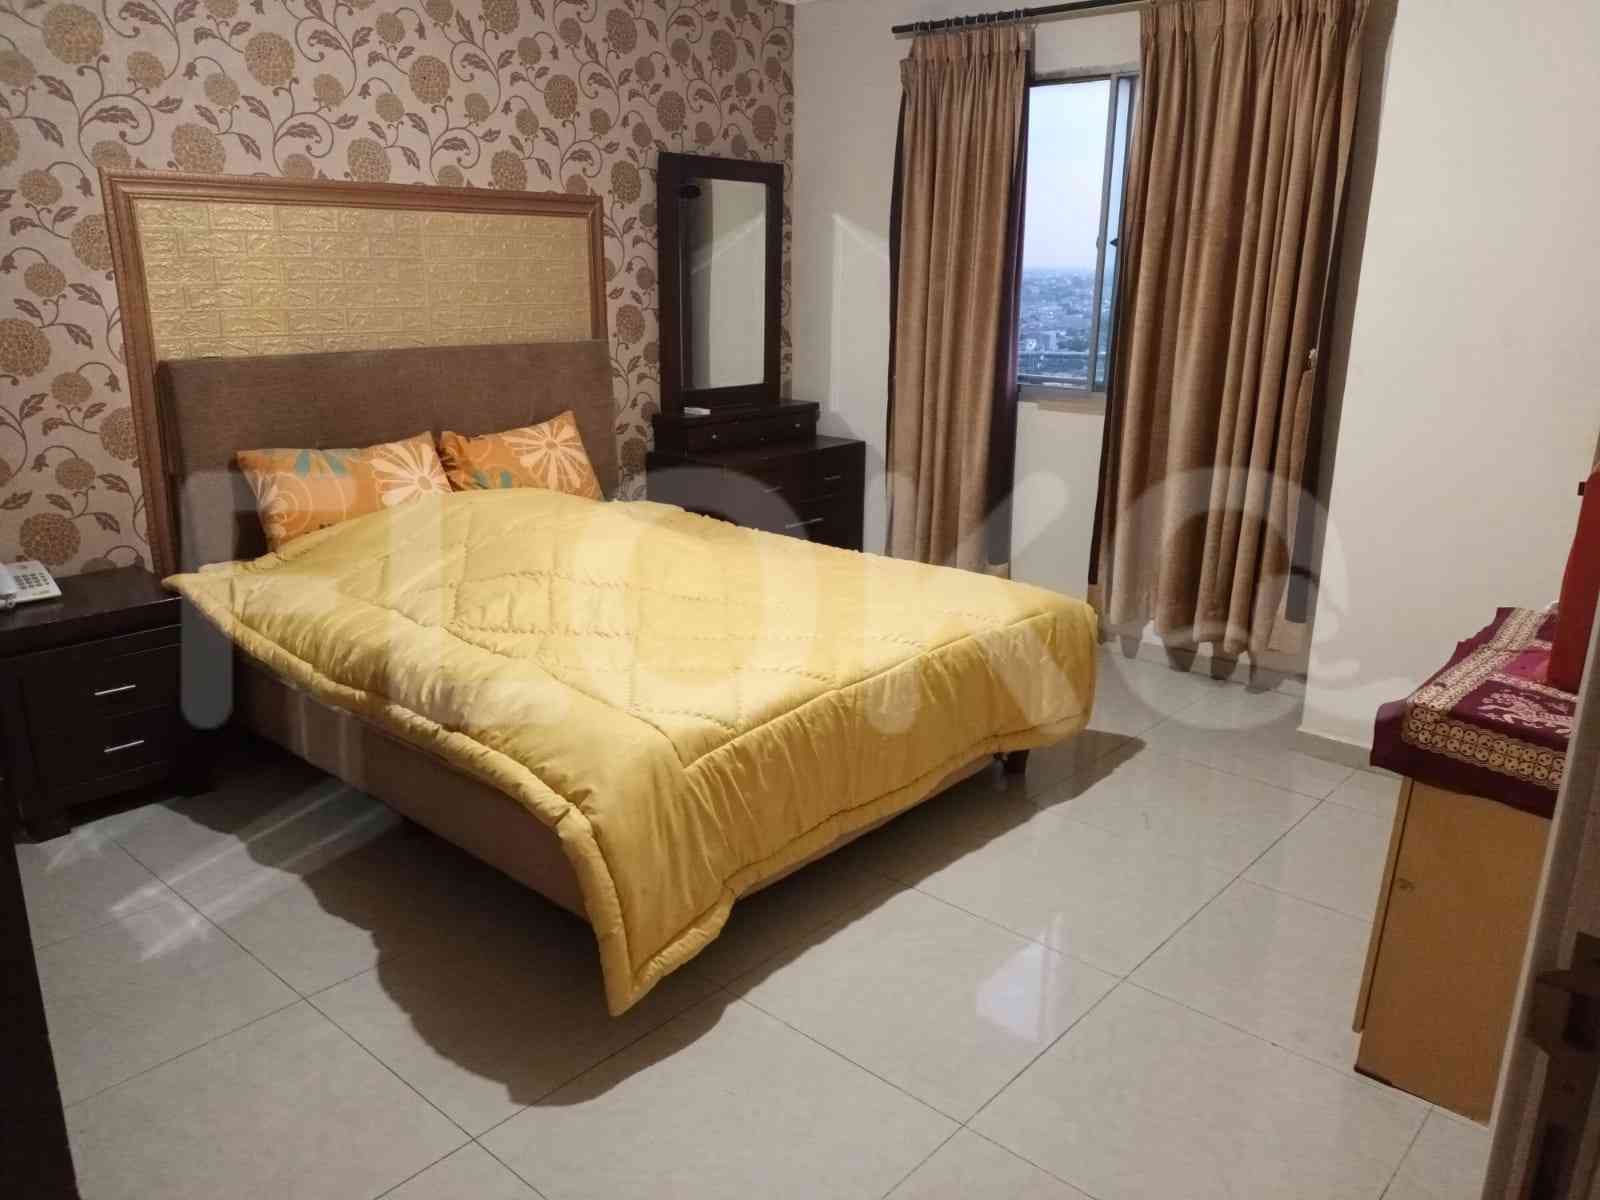 2 Bedroom on 15th Floor for Rent in Permata Senayan Apartment - fpa5c5 2